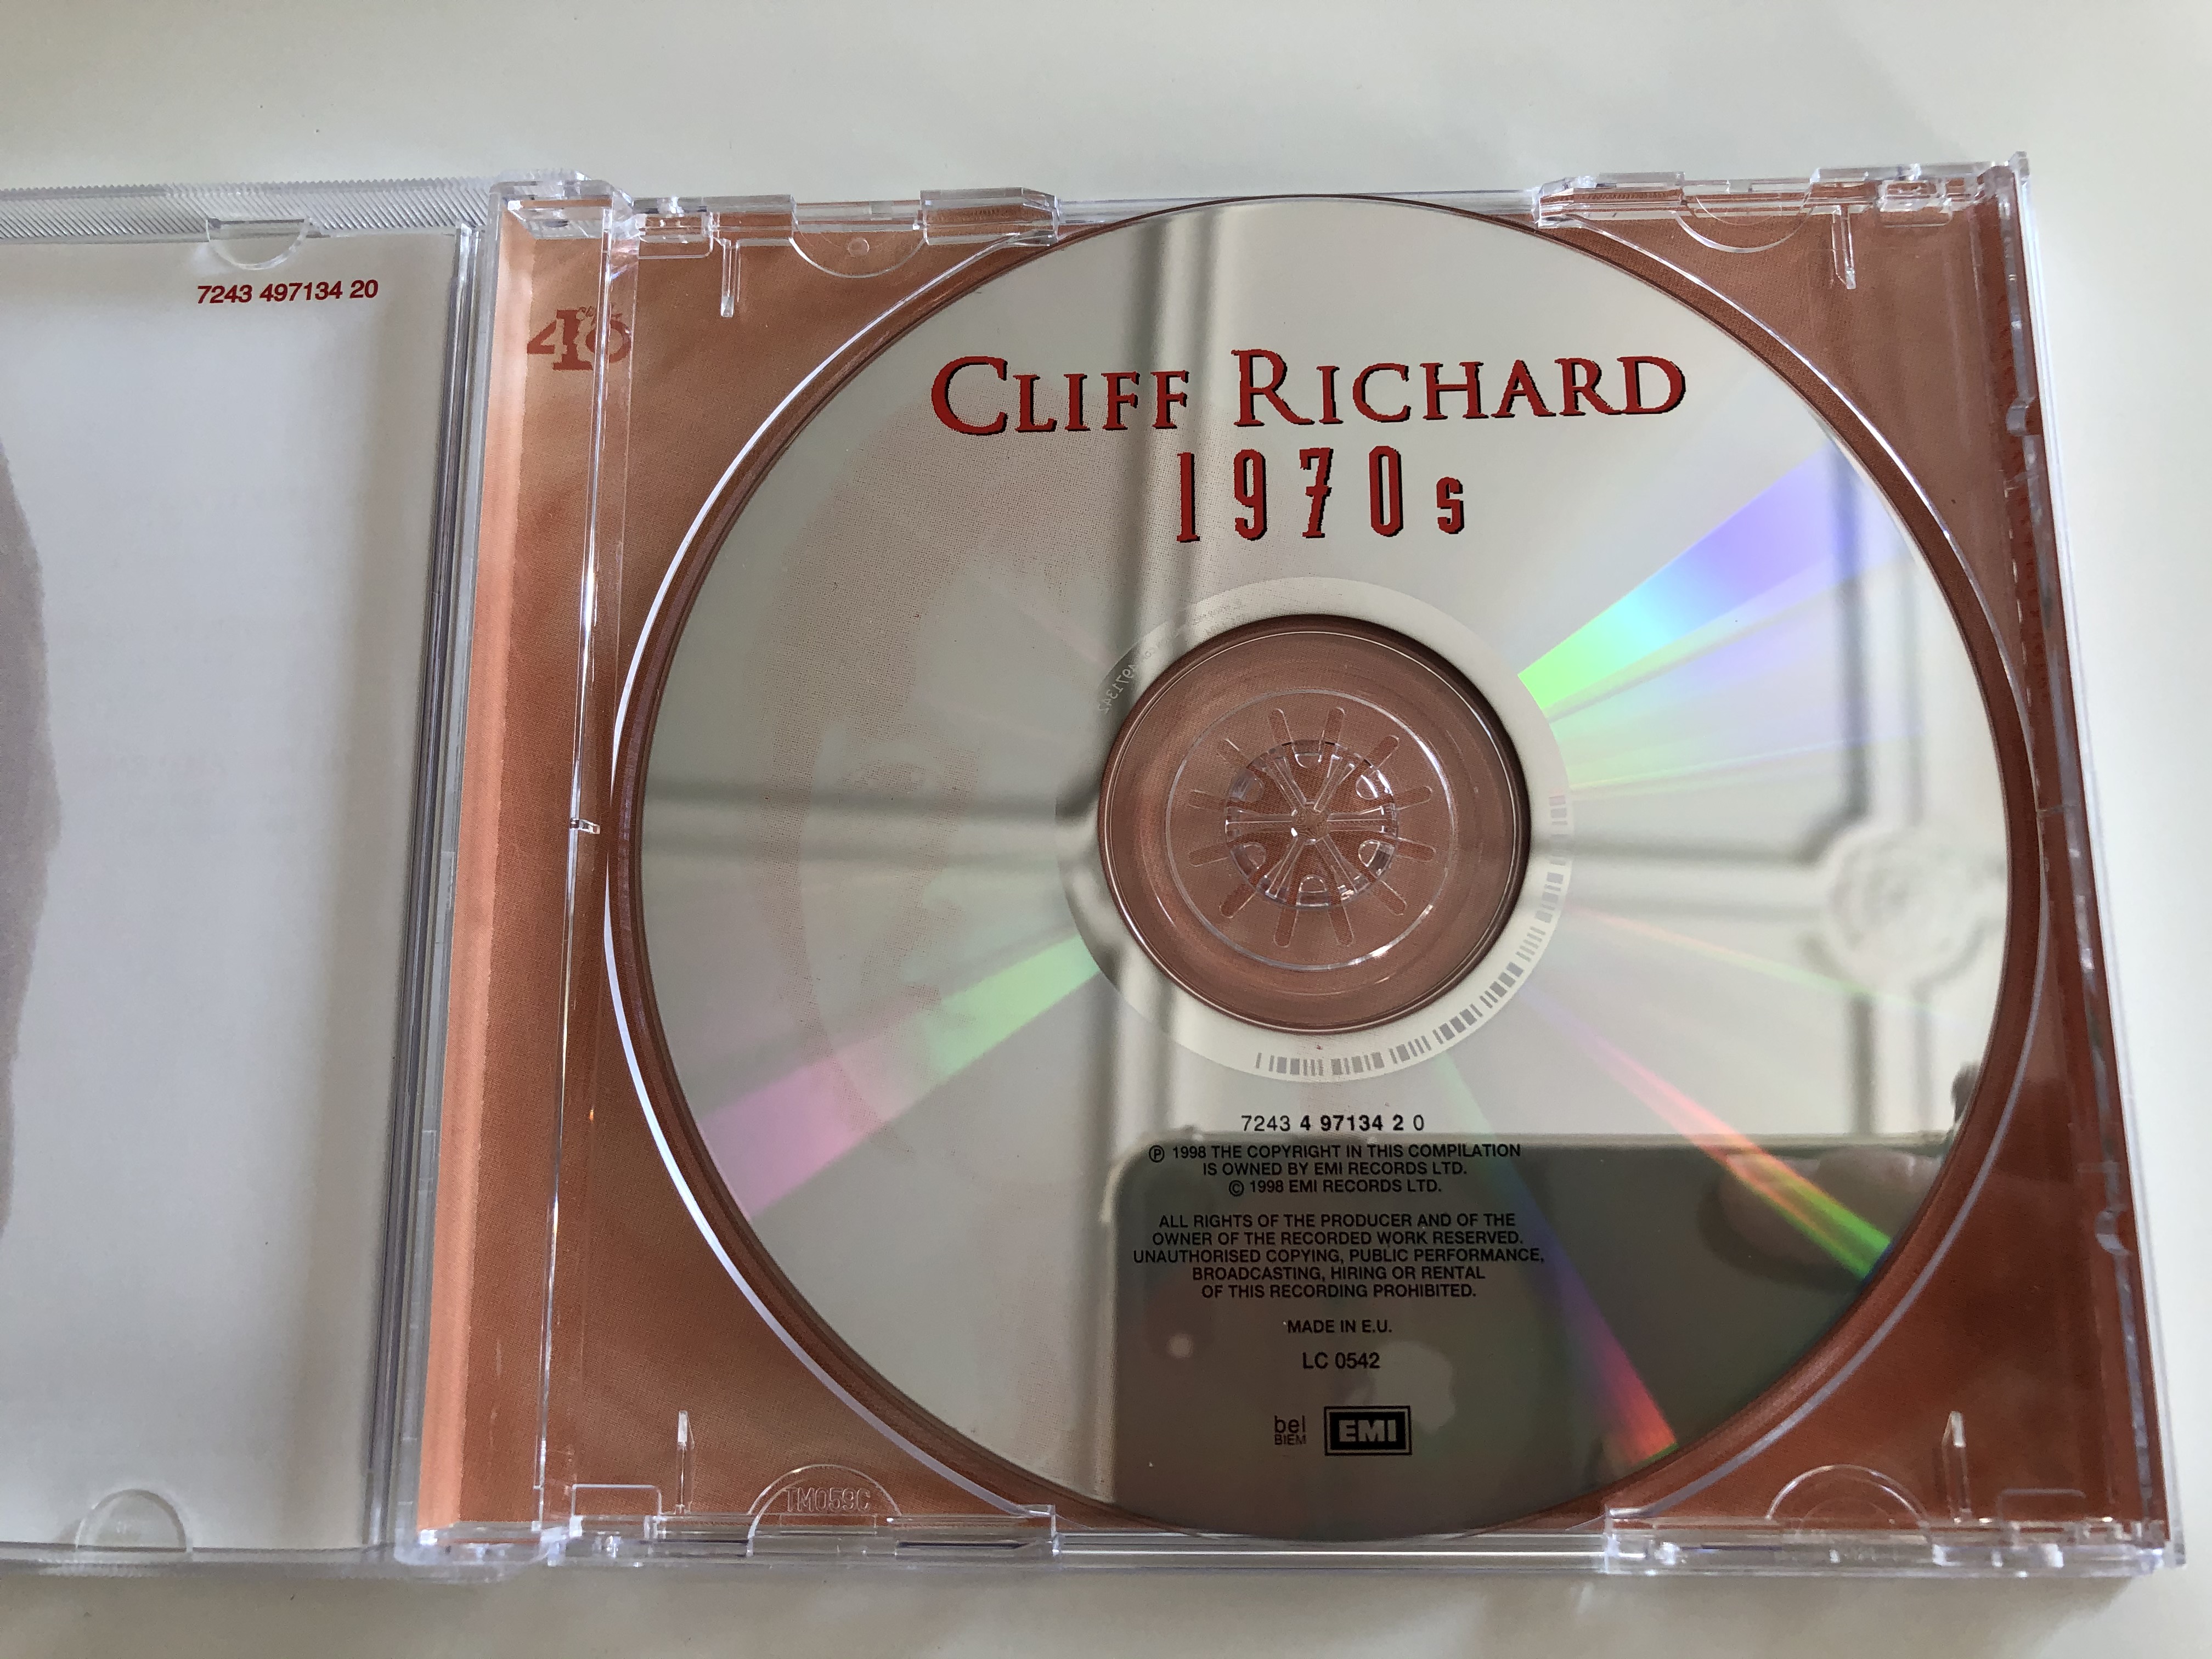 cliff-richard-1970s-emi-audio-cd-1998-724349713420-3-.jpg